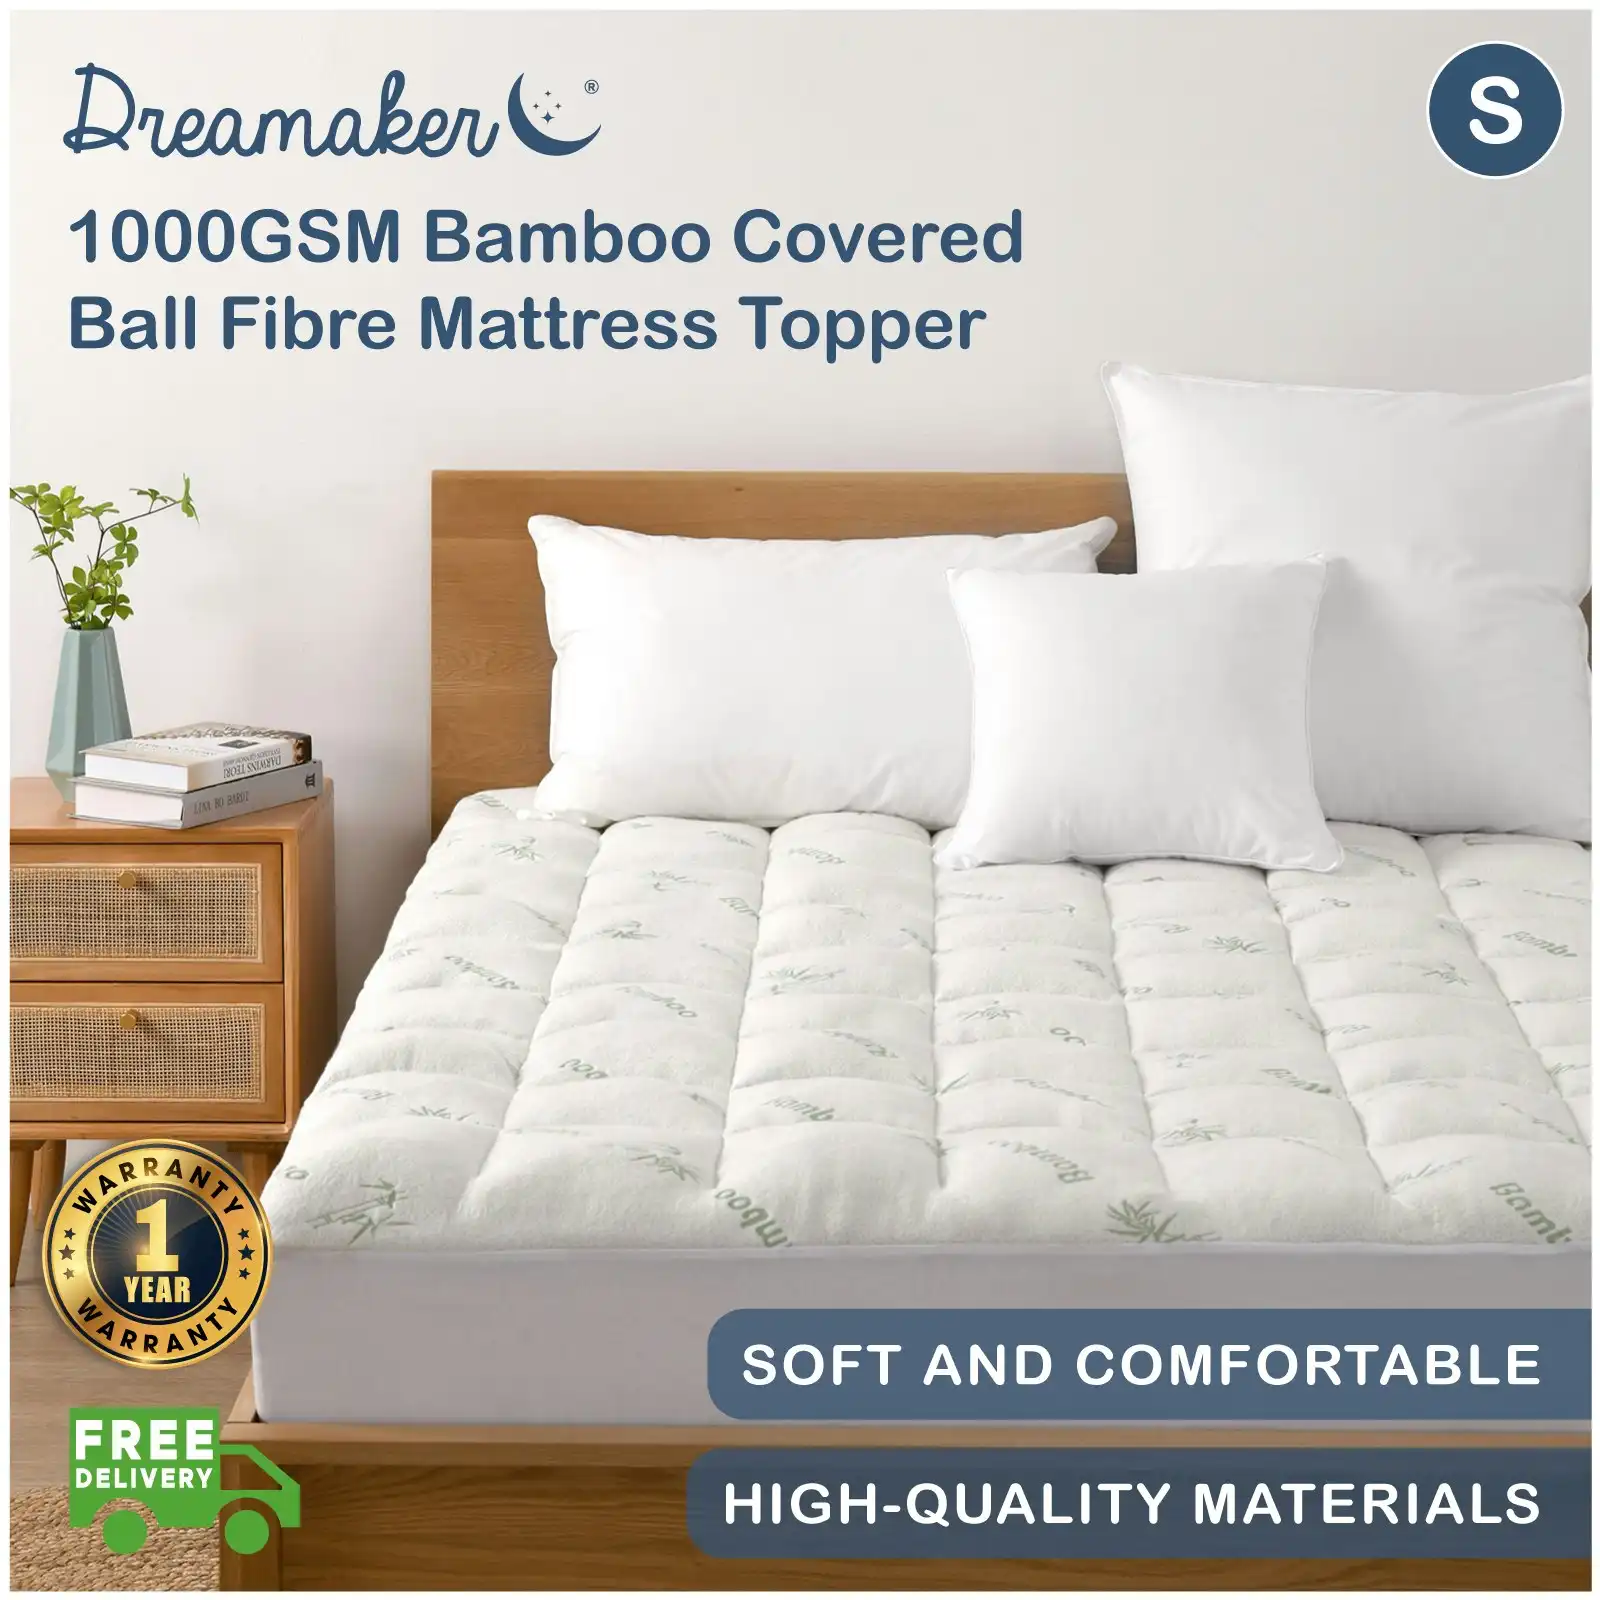 9009268 Dreamaker 1000GSM Bamboo Covered Ball Fibre Mattress Topper - Single Bed